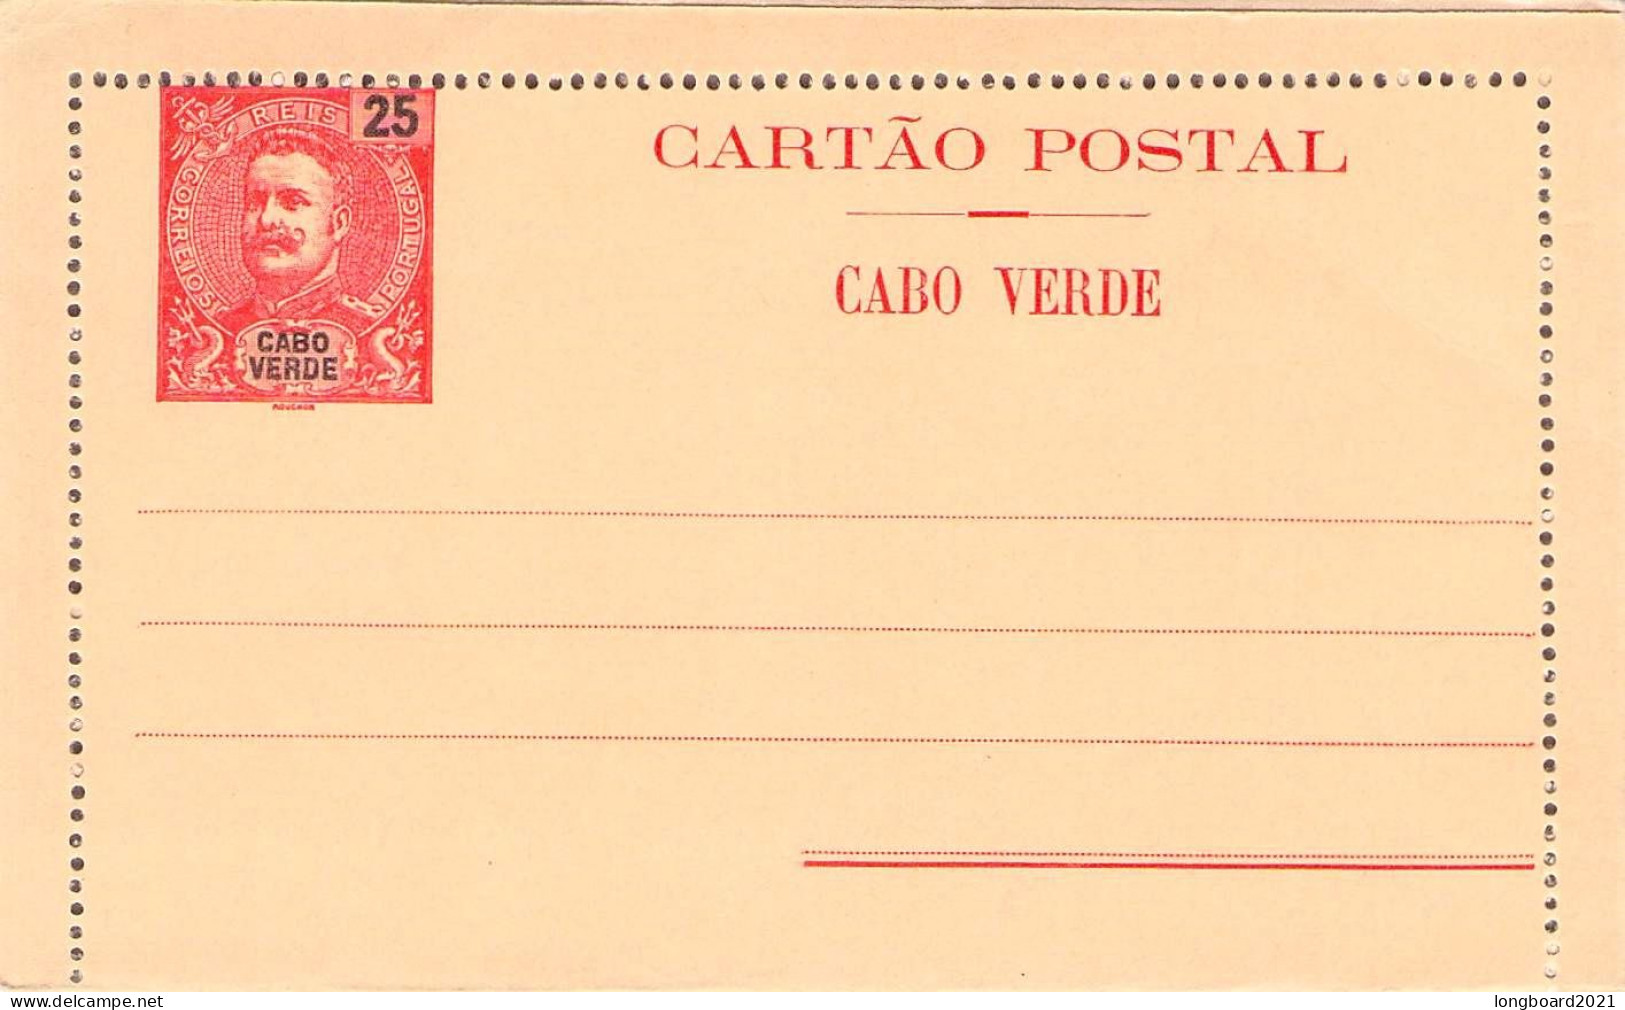 CABO VERDE - CARTAO POSTAL 25 REIS Unc / *2064 - Islas De Cabo Verde